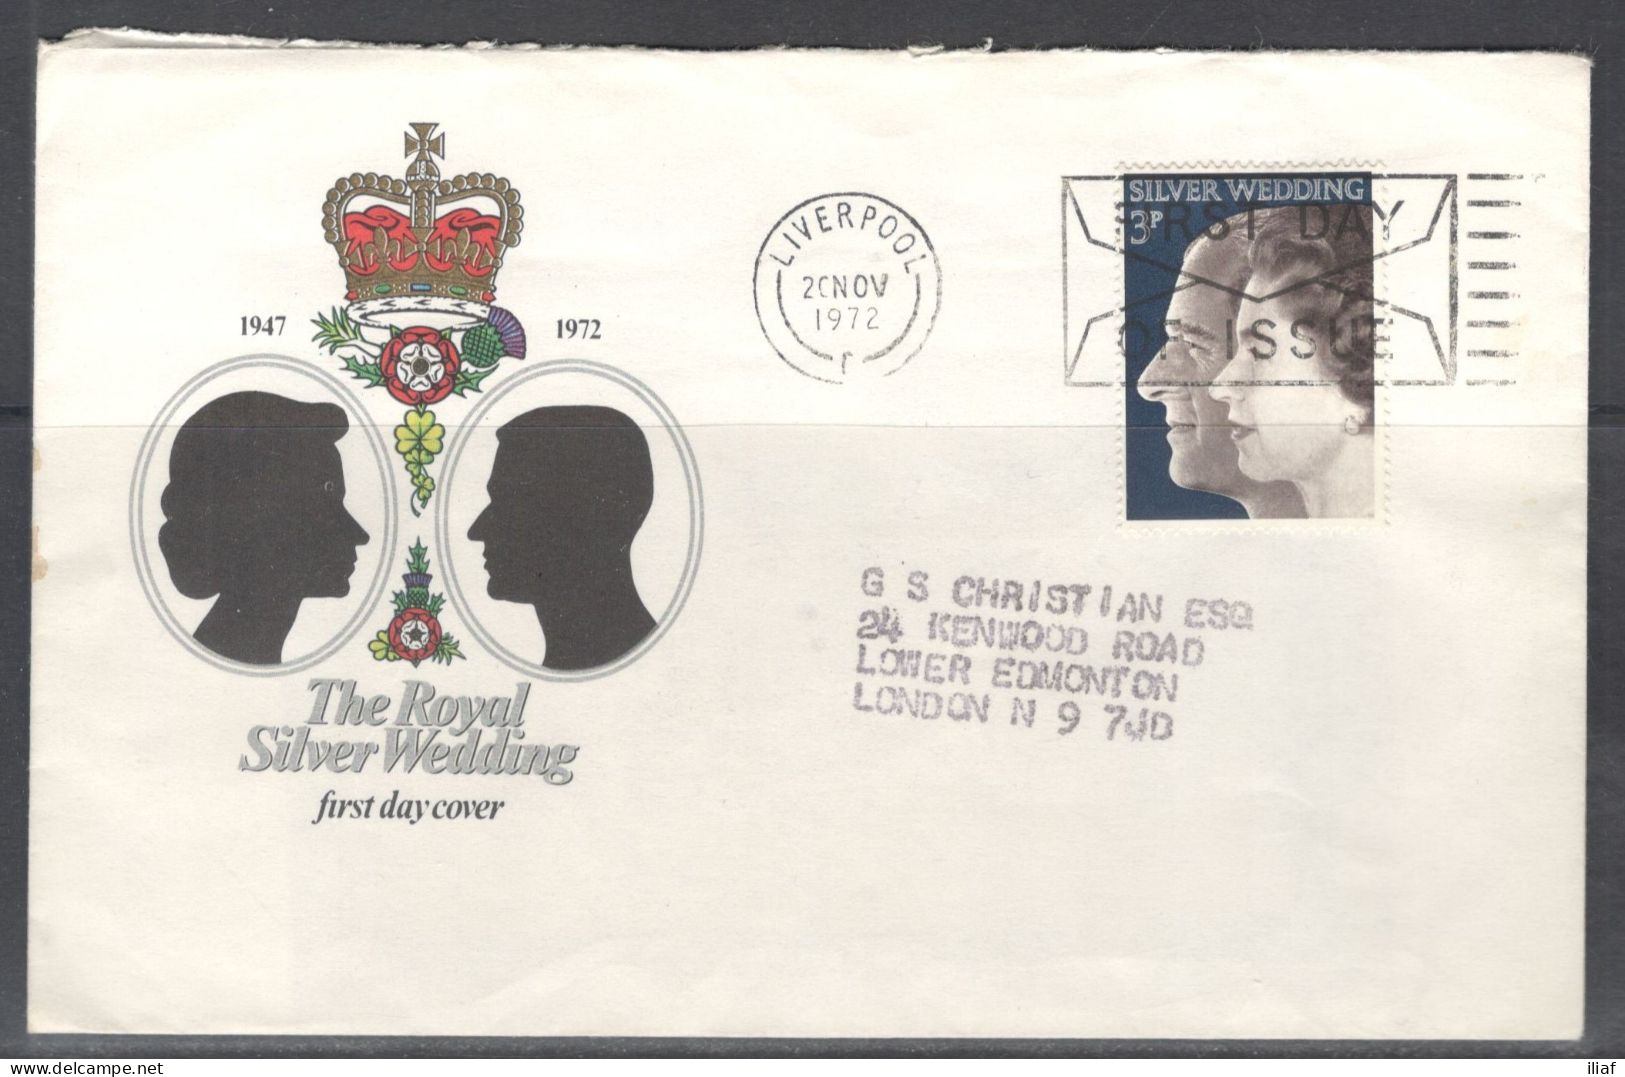 United Kingdom Of Great Britain. FDC Sc. 683. 25th Wedding Anniversary Of Queen Elizabeth II And Prince Philip  FDC Canc - 1971-80 Ediciones Decimal